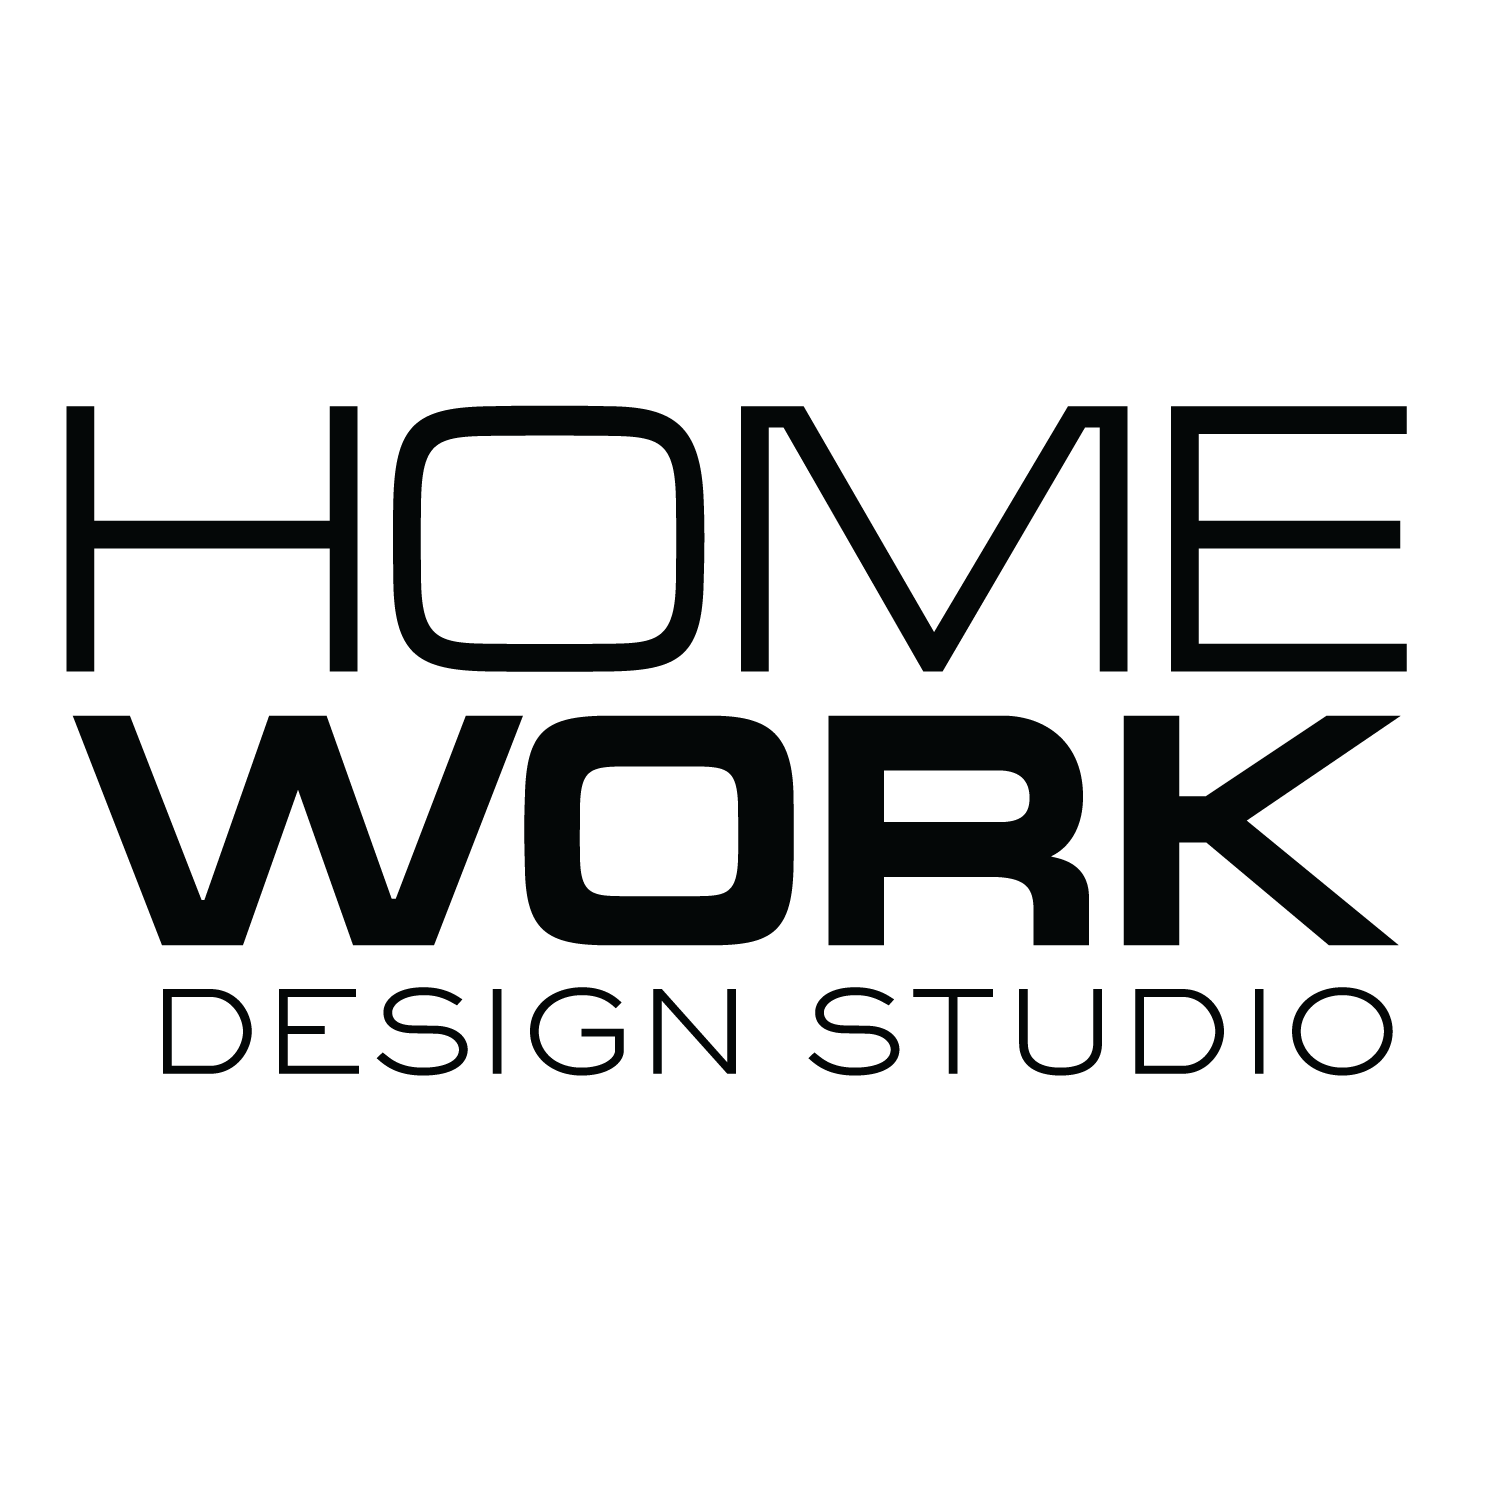 Homework-Design-Logo-W-bg